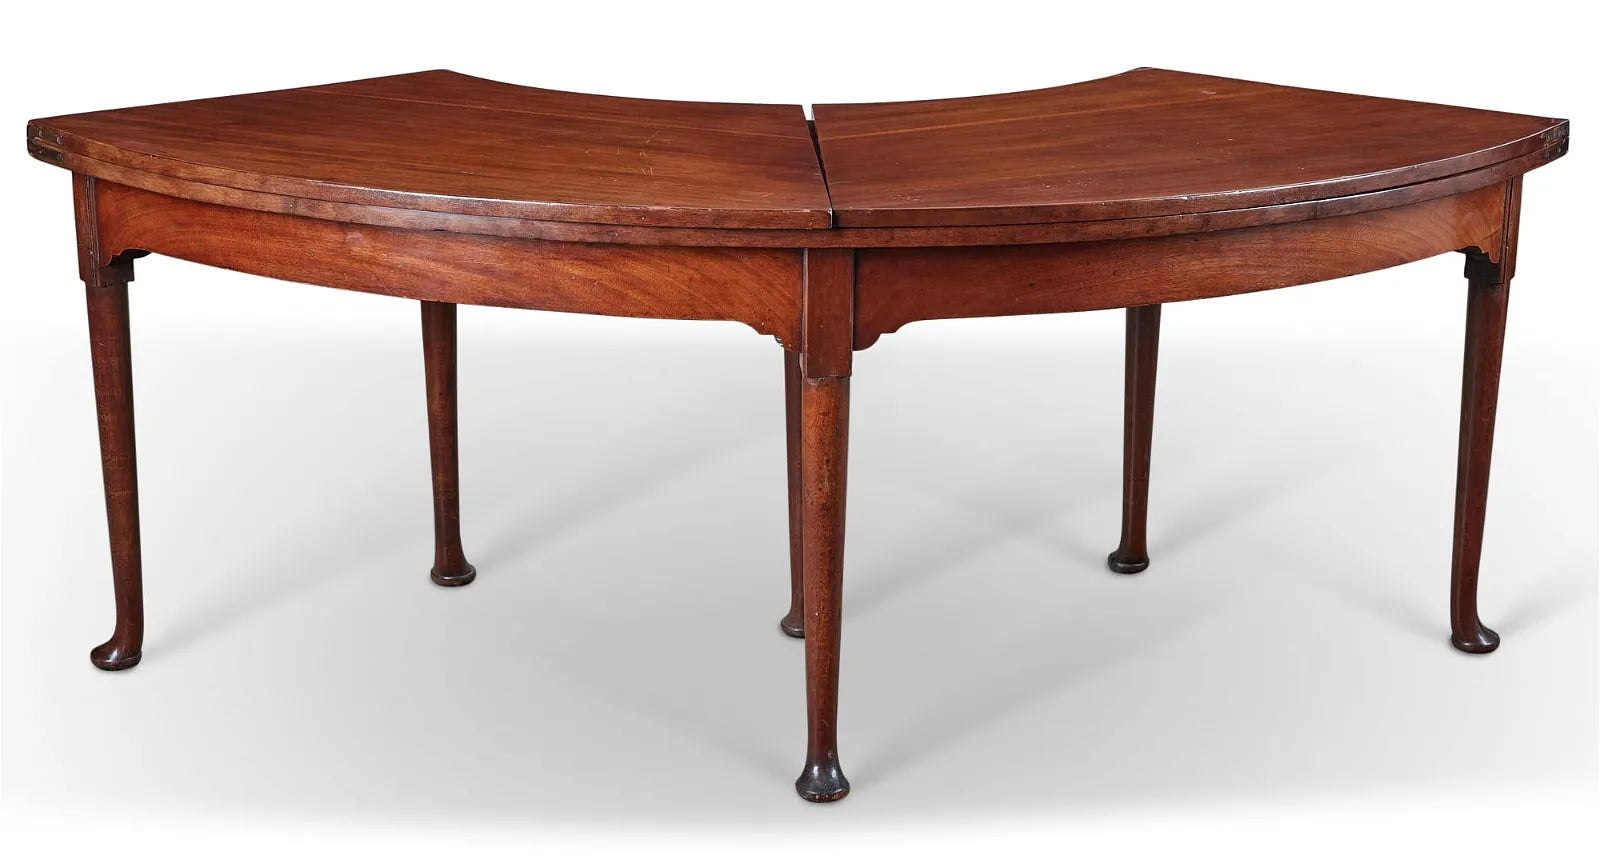 AF1-001: Early 19th Century Georgian Mahogany Horseshoe Semi-Circular "Hunt" Table